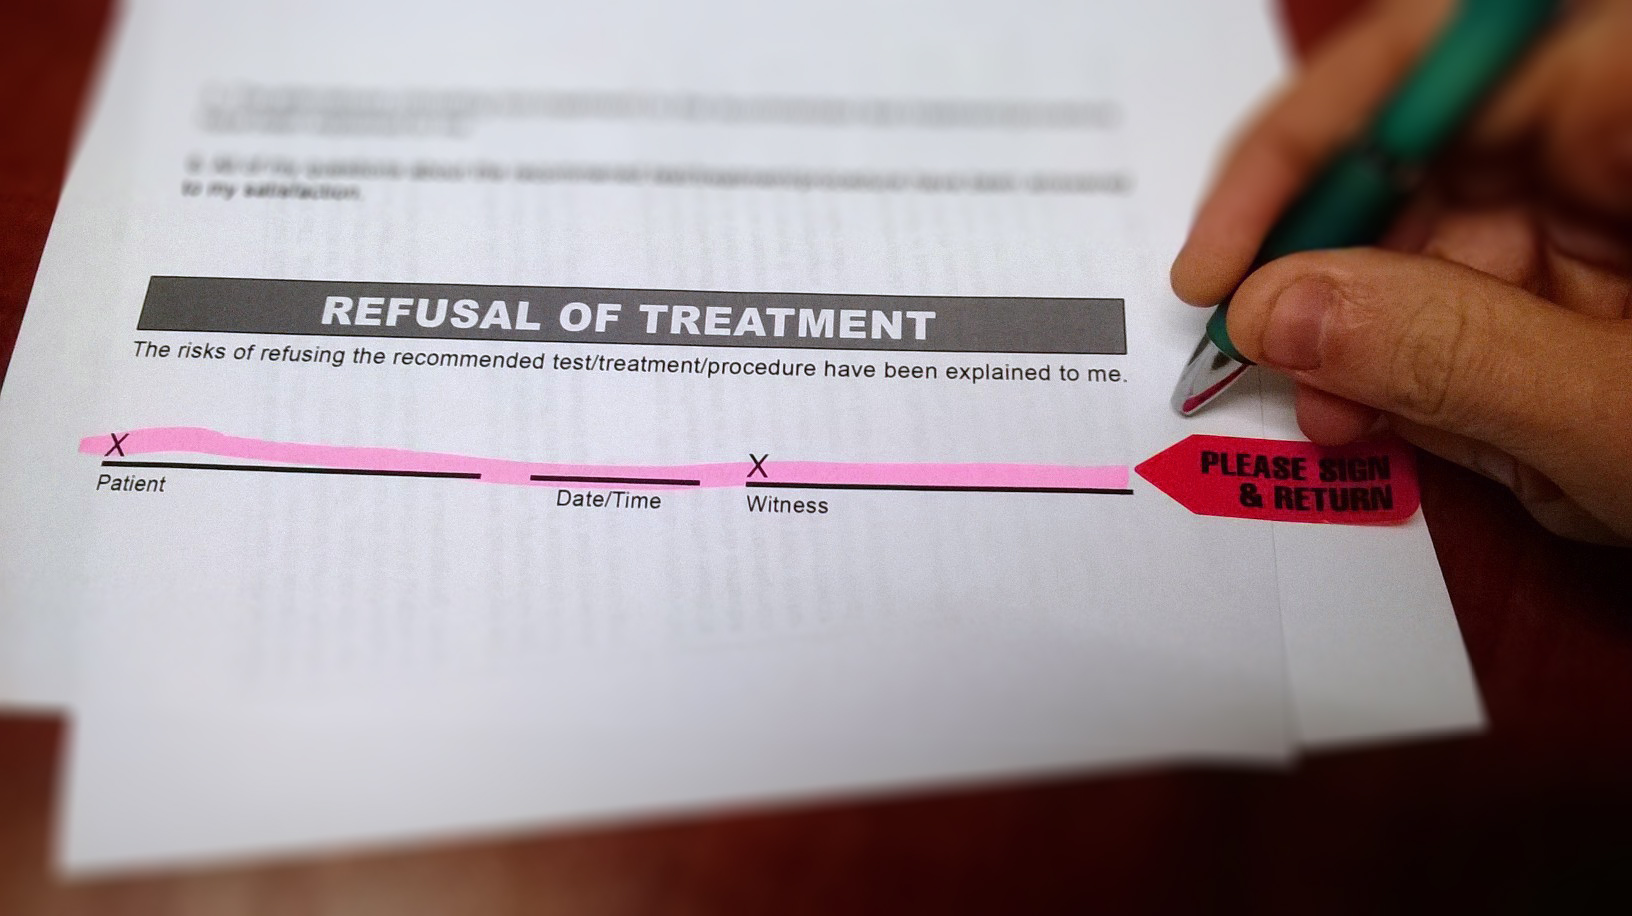 File:Refusal of treatment form.jpg